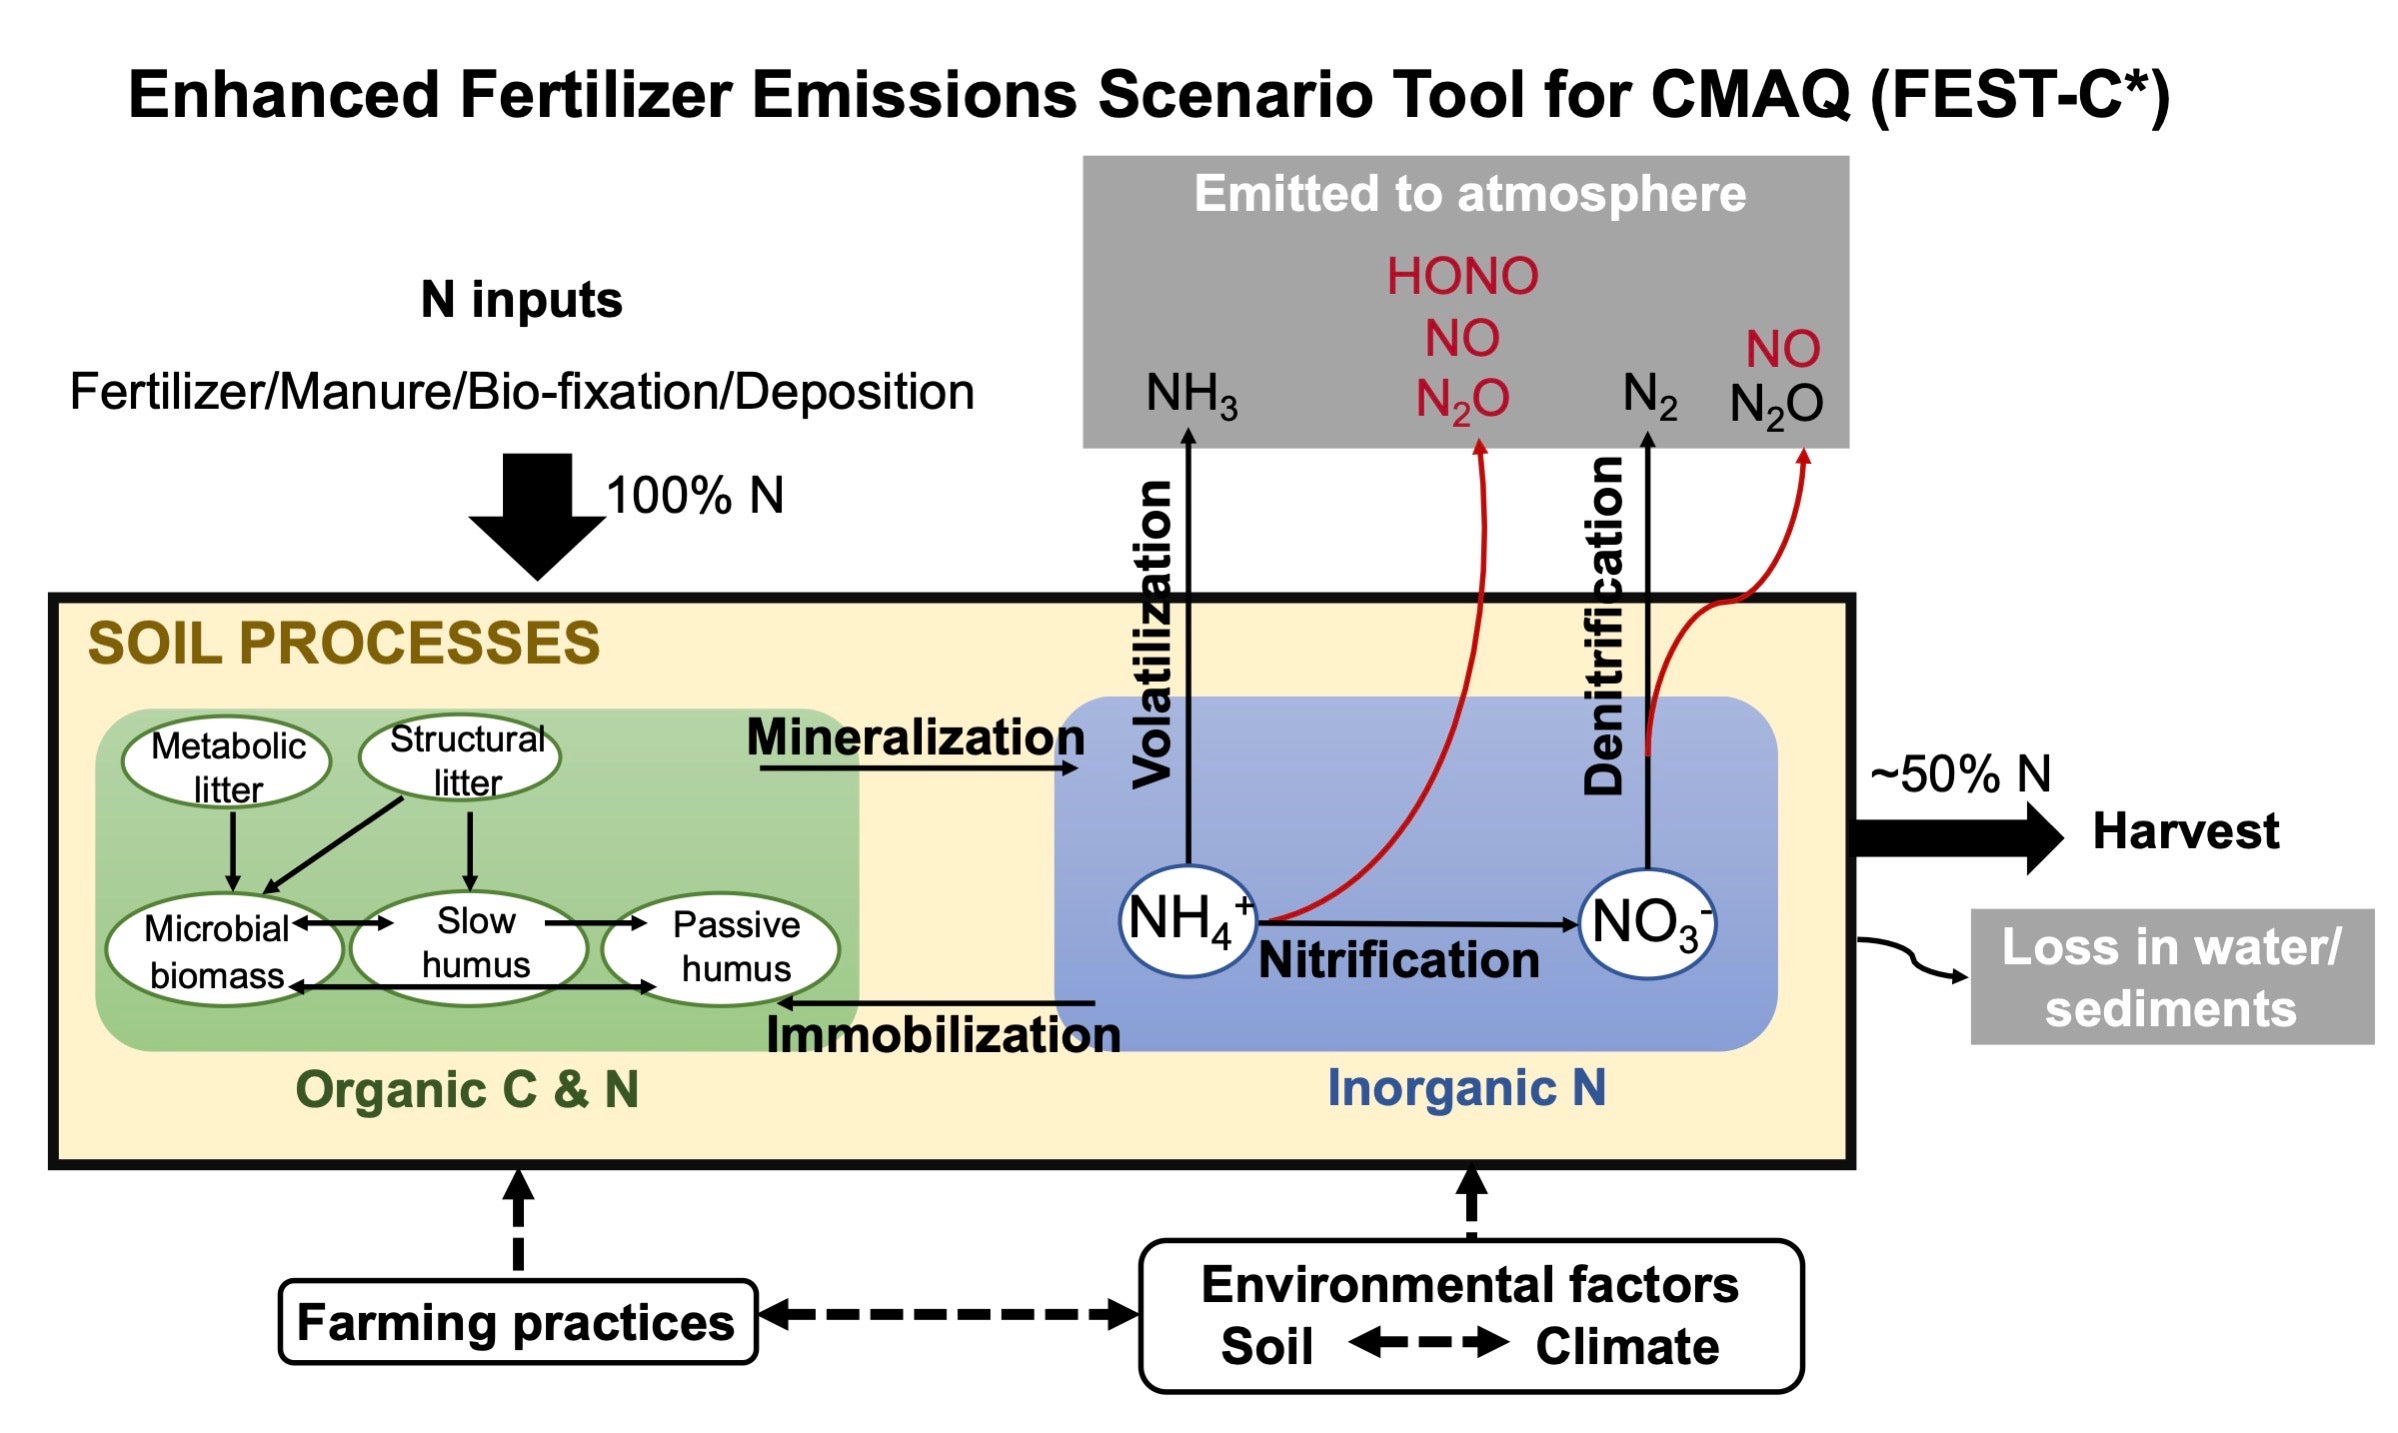 Soil Nitrogen Modeling in FEST-C